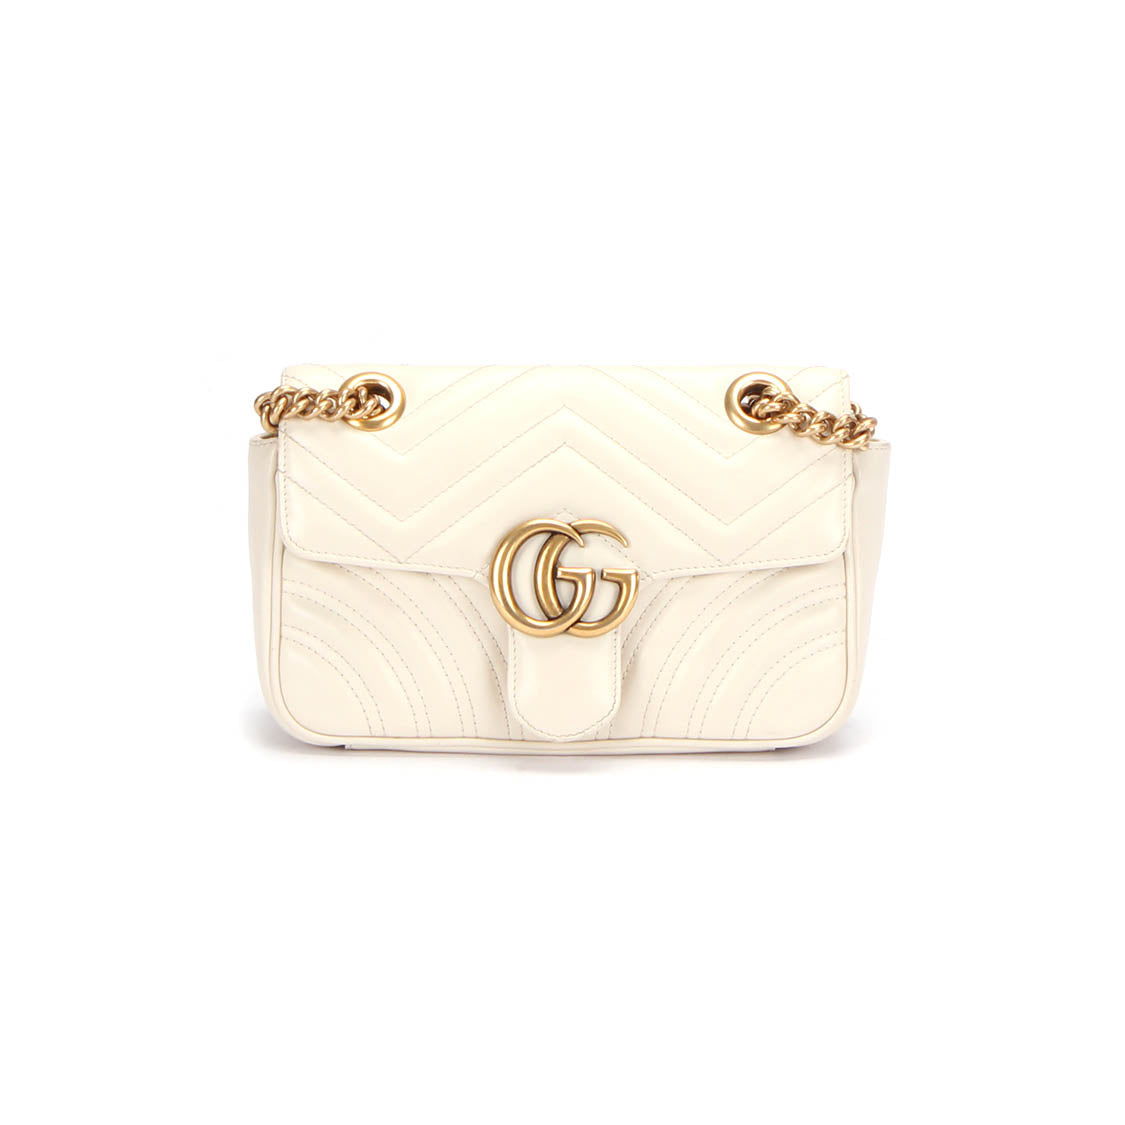 Gucci Mini GG Marmont Leather Shoulder Bag Leather Shoulder Bag 446744 in Good condition